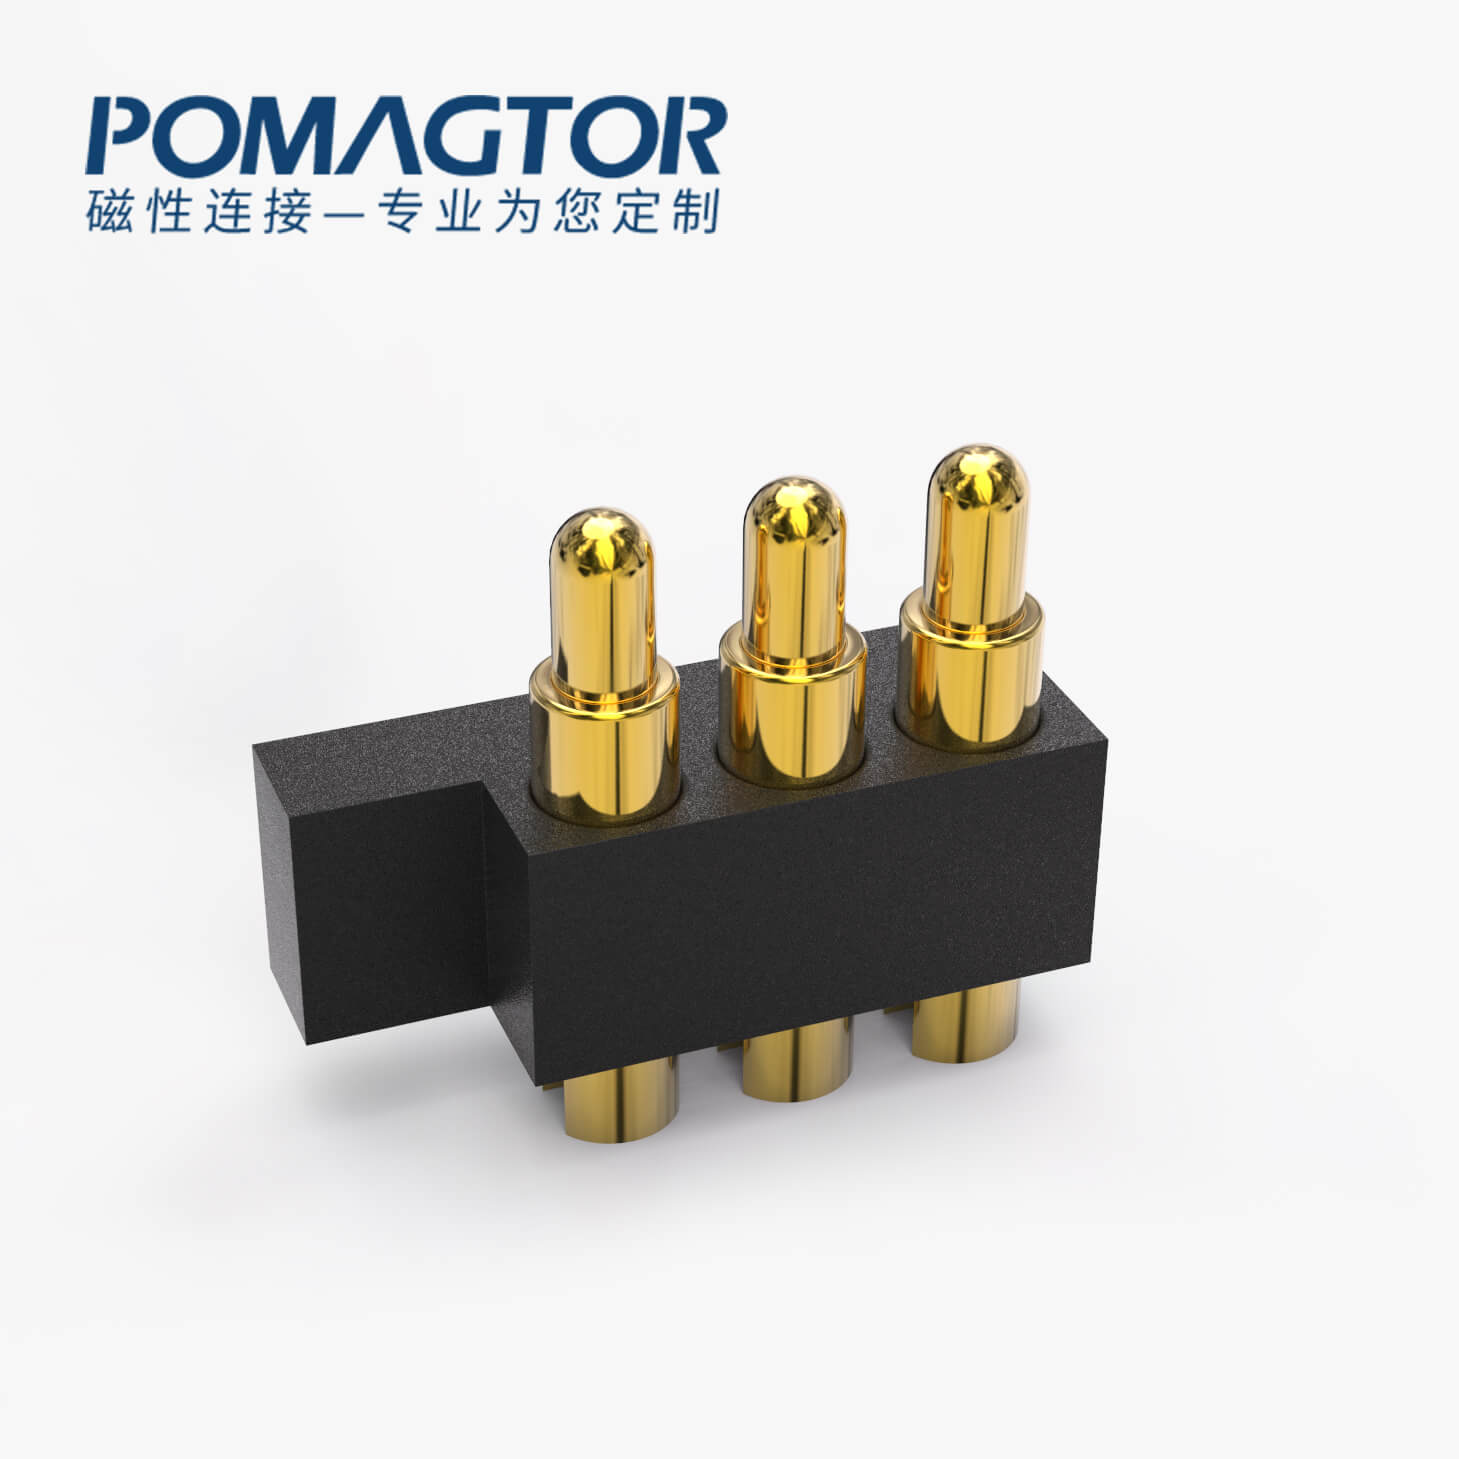 POGO PIN连接器 侧帖式：3PIN，电镀黄铜Au3u，电压12V，电流4.5A，工作行程1.2mm:70gfMax，弹力30000次+，工作温度-30°~85°